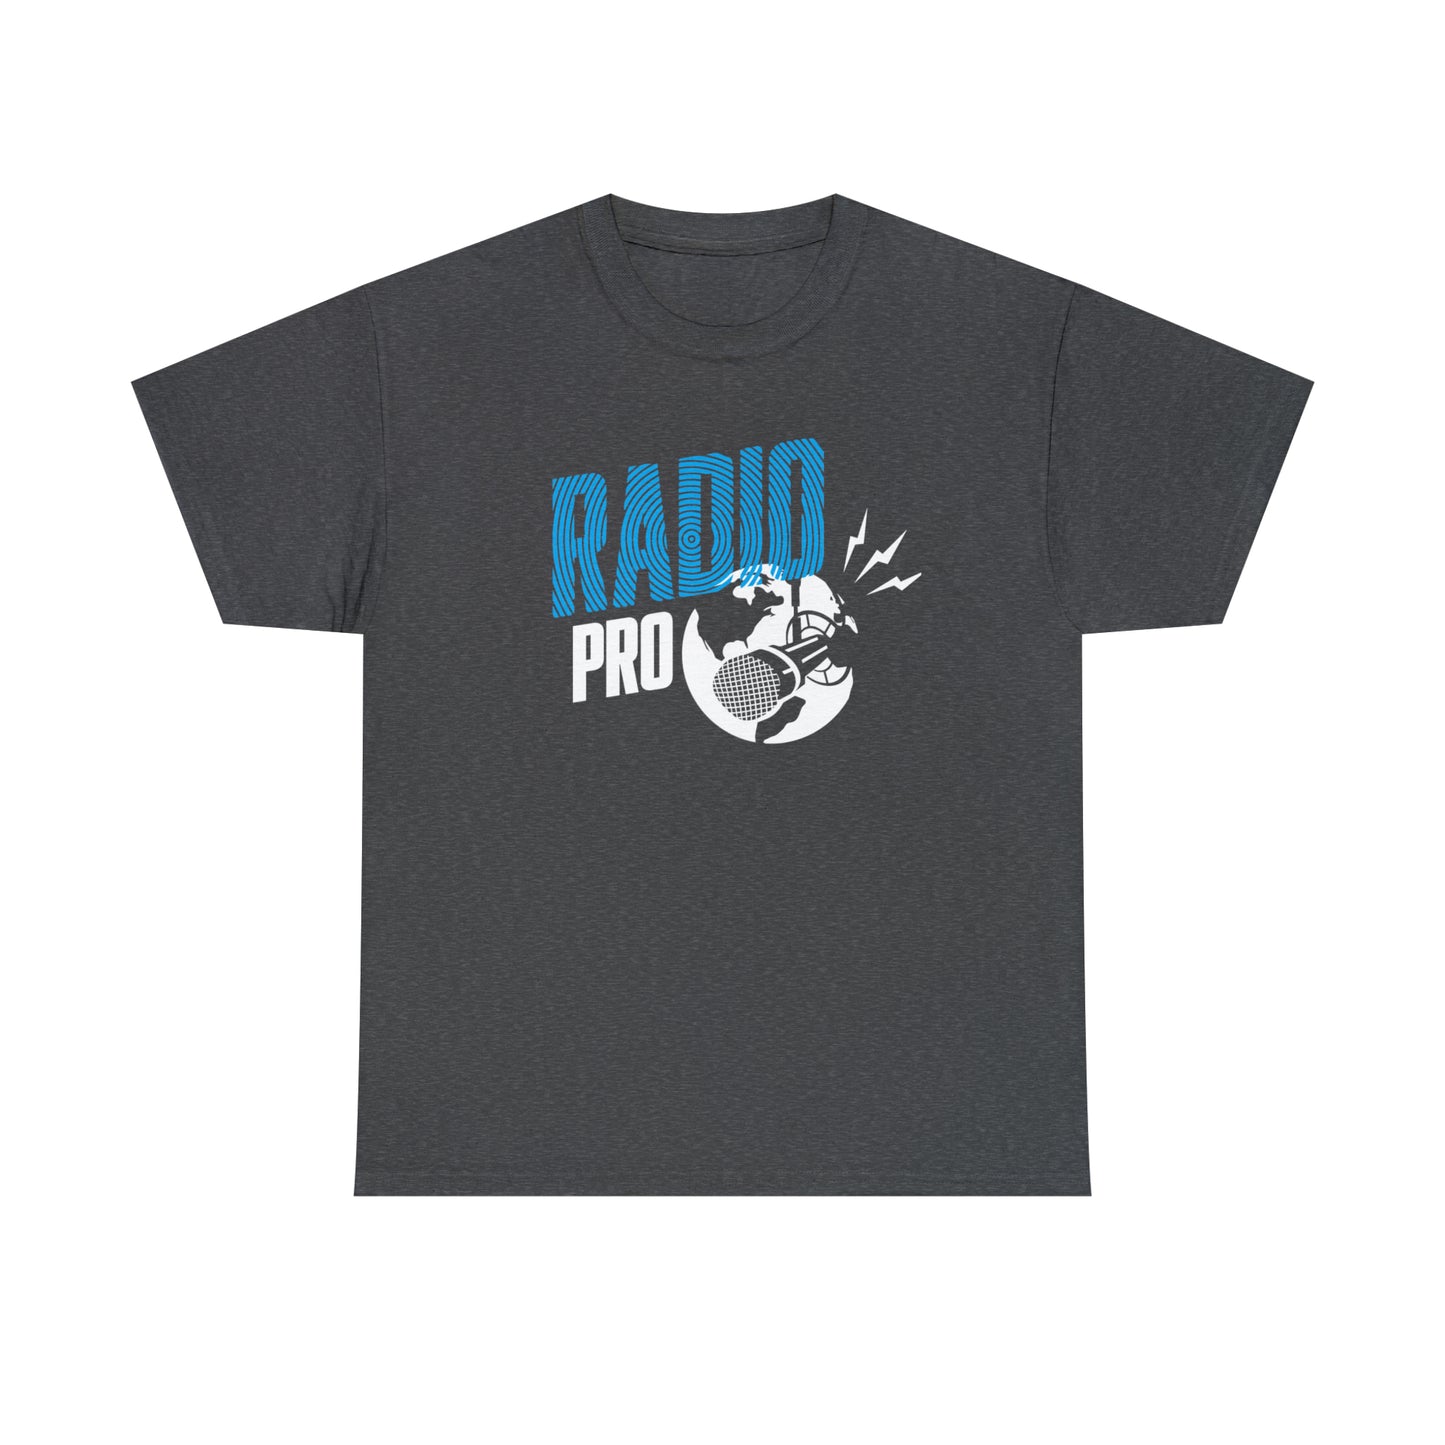 Radio DJ Tee, for Professional Broadcasters who Love Radio